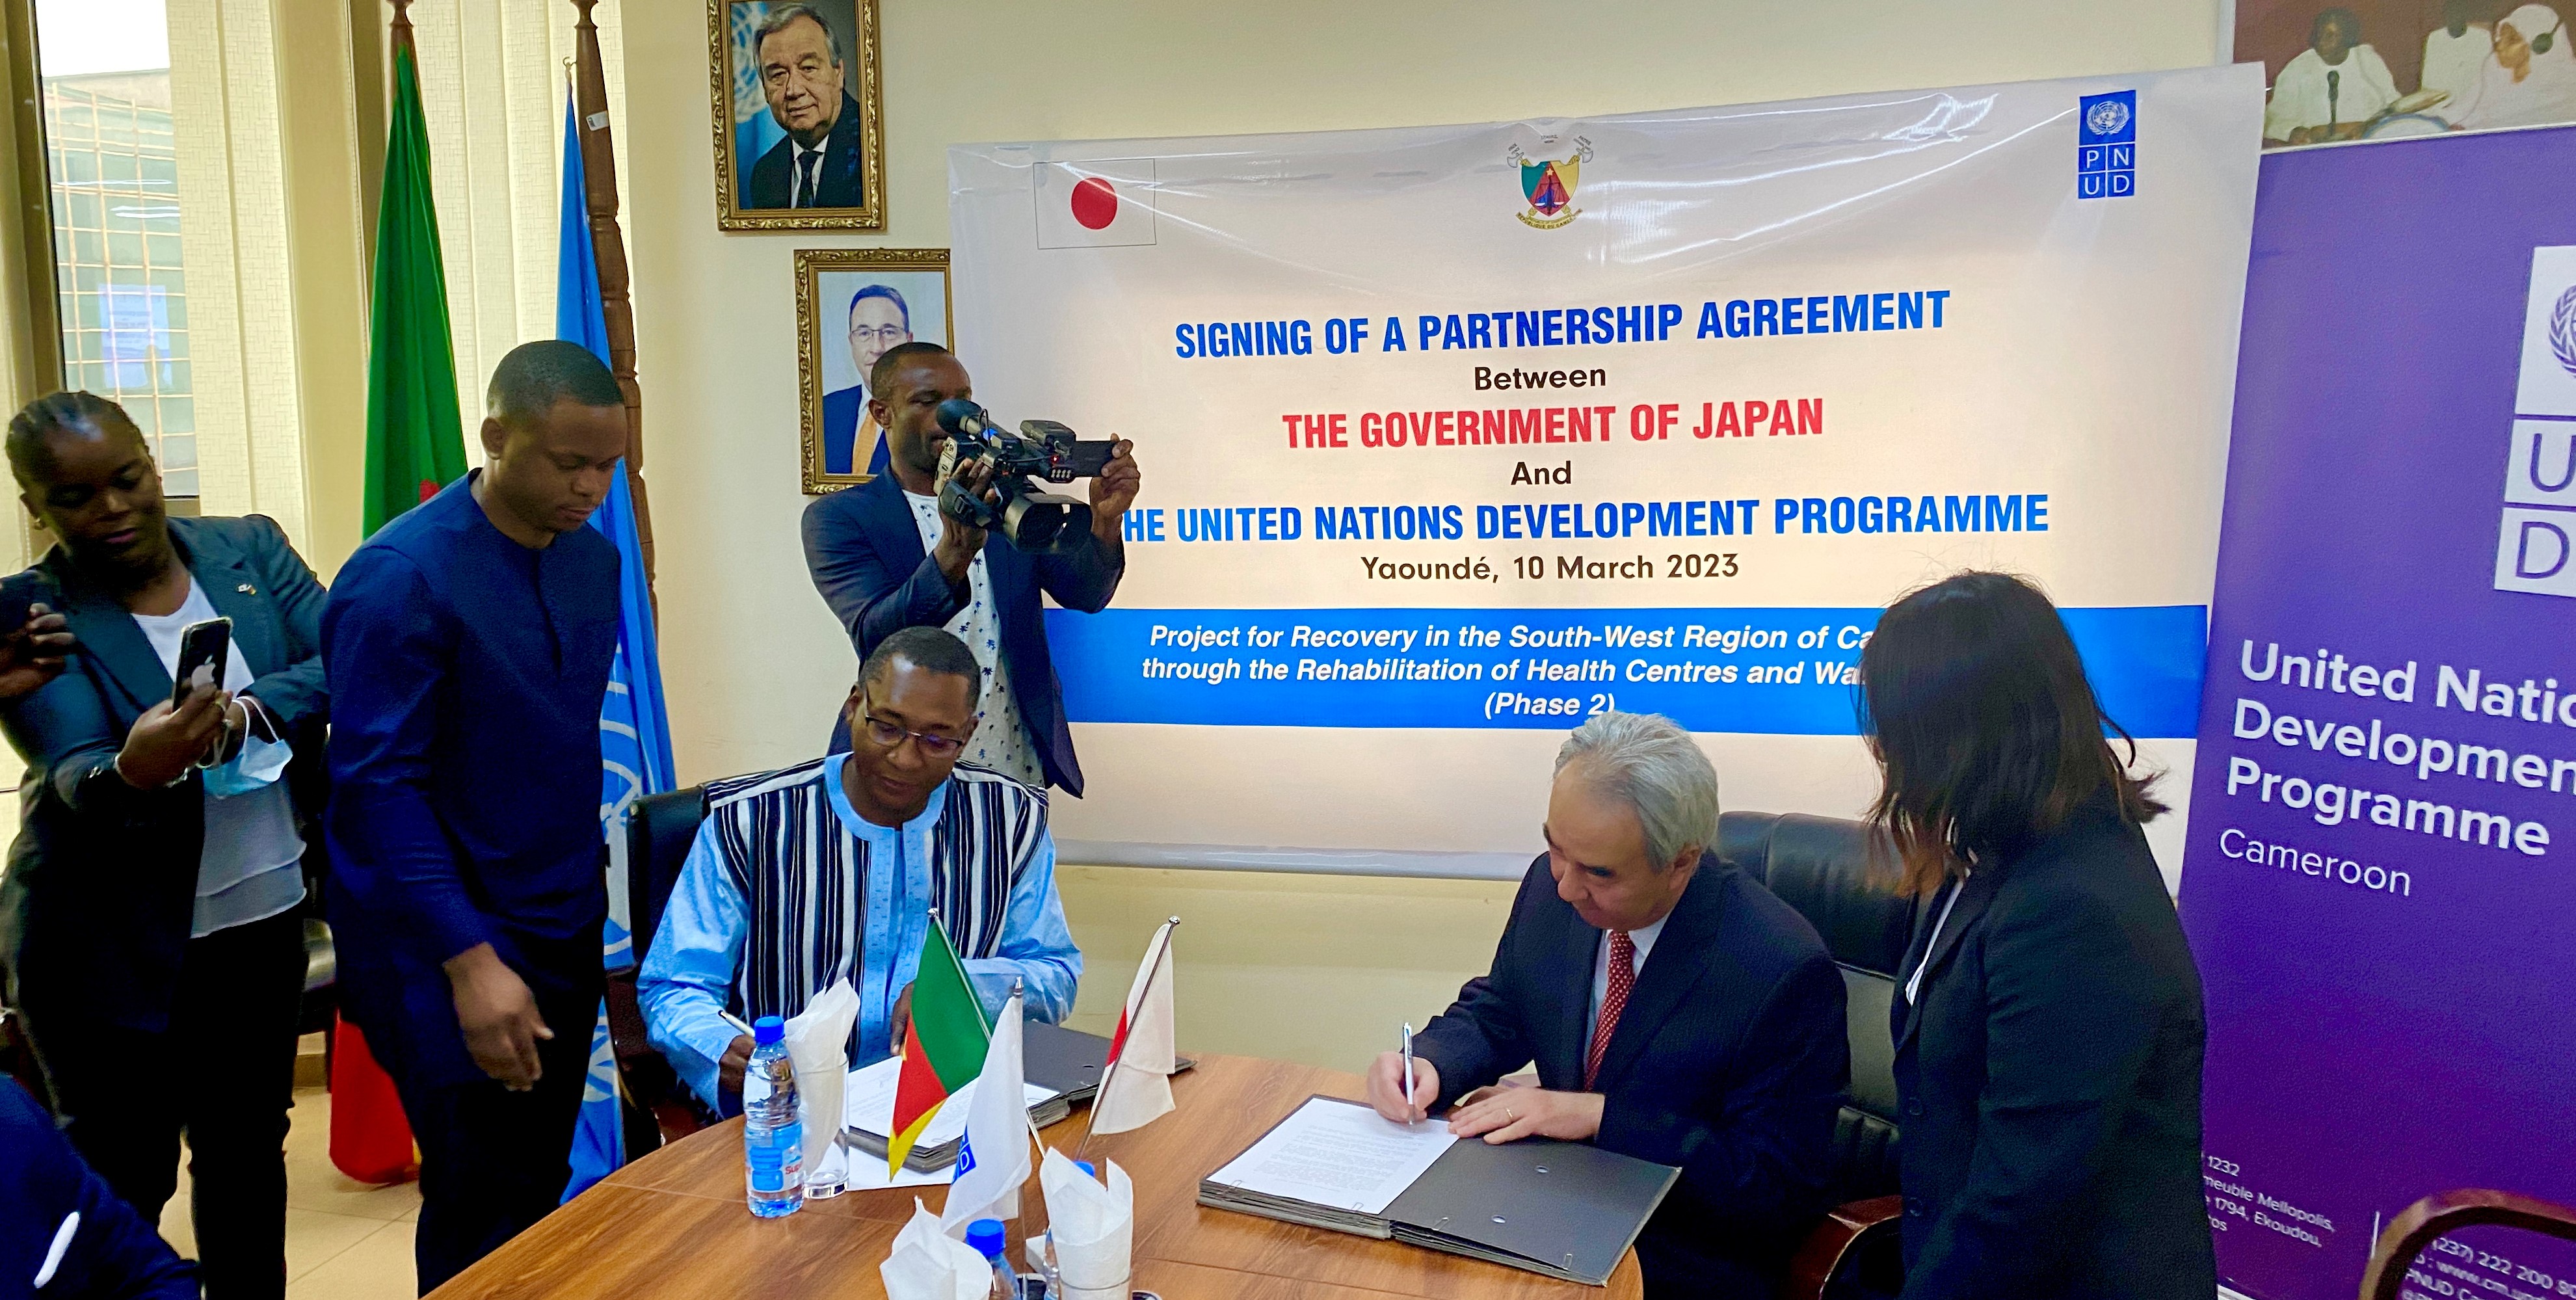 UNDP Cameroon’s Acting Resident Representative, Alassane Ba, and the Ambassador of Japan to Cameroon, H.E. Mr. TAKAOKA Nozomu, signing the Partnership Agreement